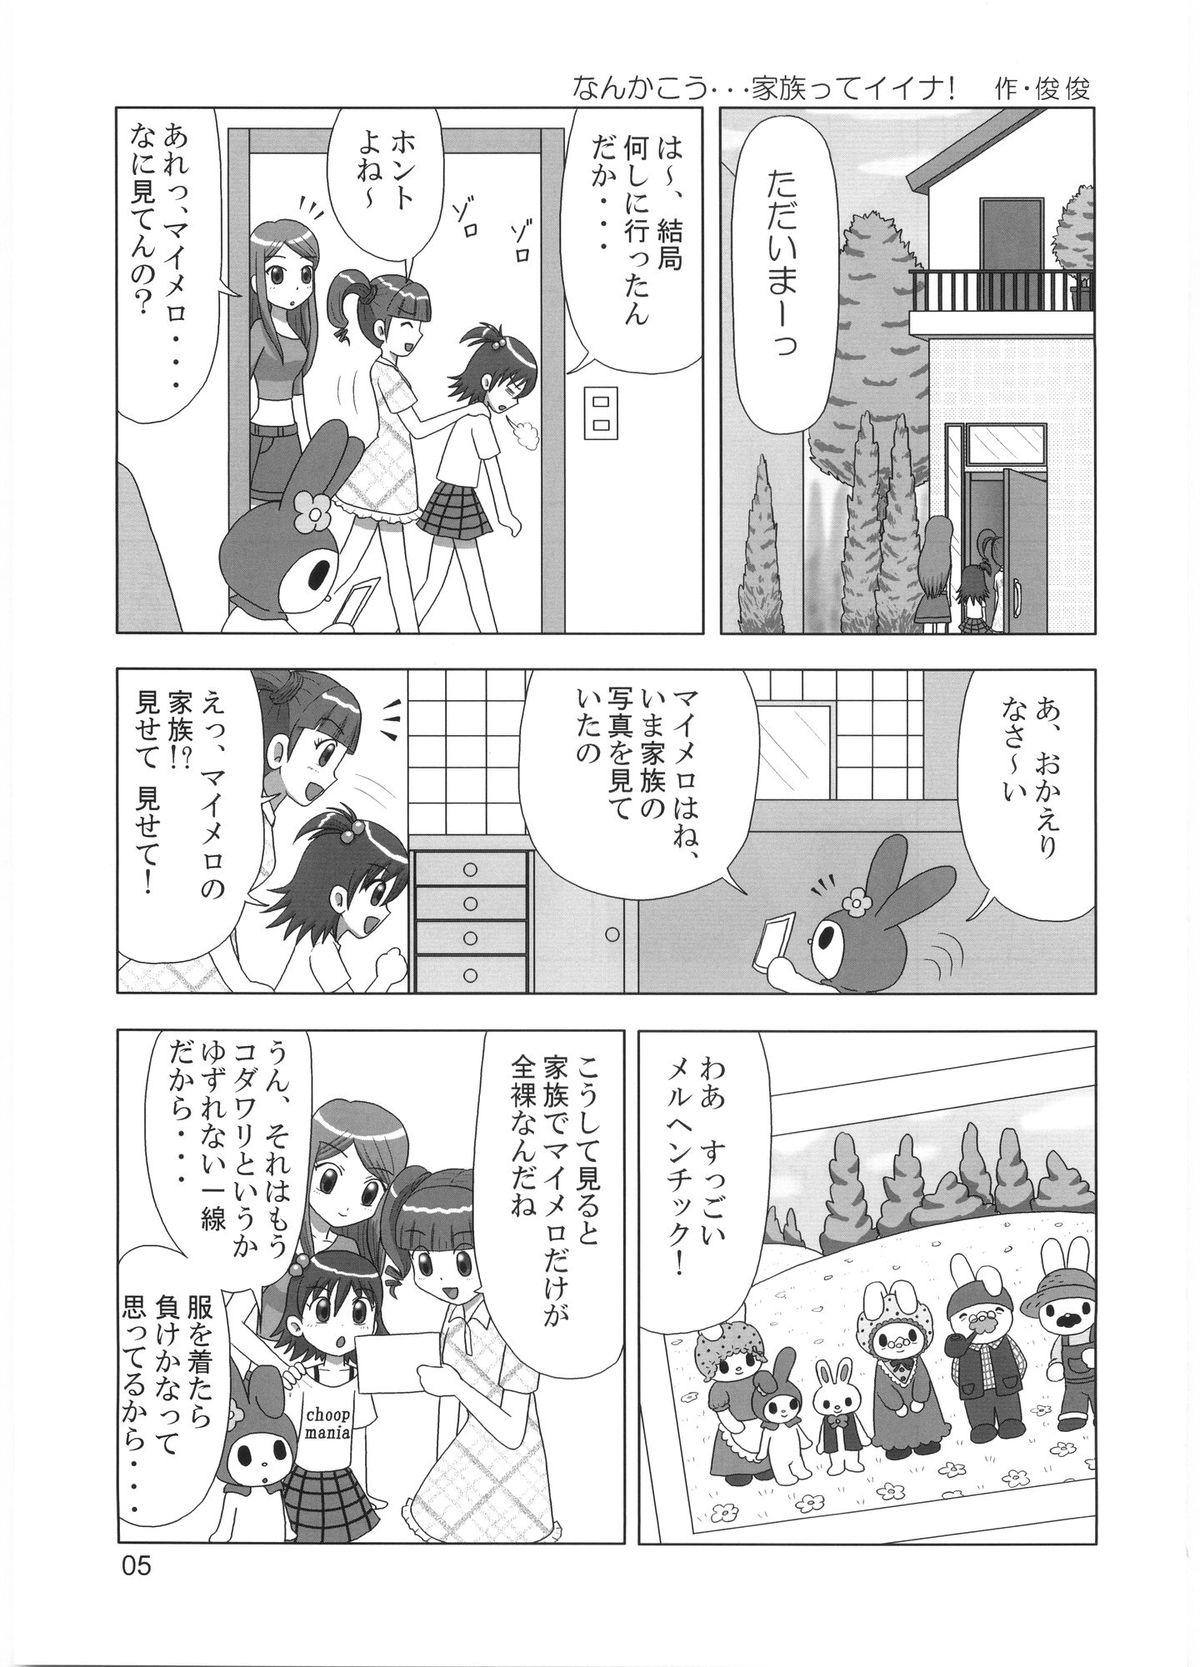 Sloppy Tareme Paradise Vol.12 - 2x2 shinobuden Amante - Page 4